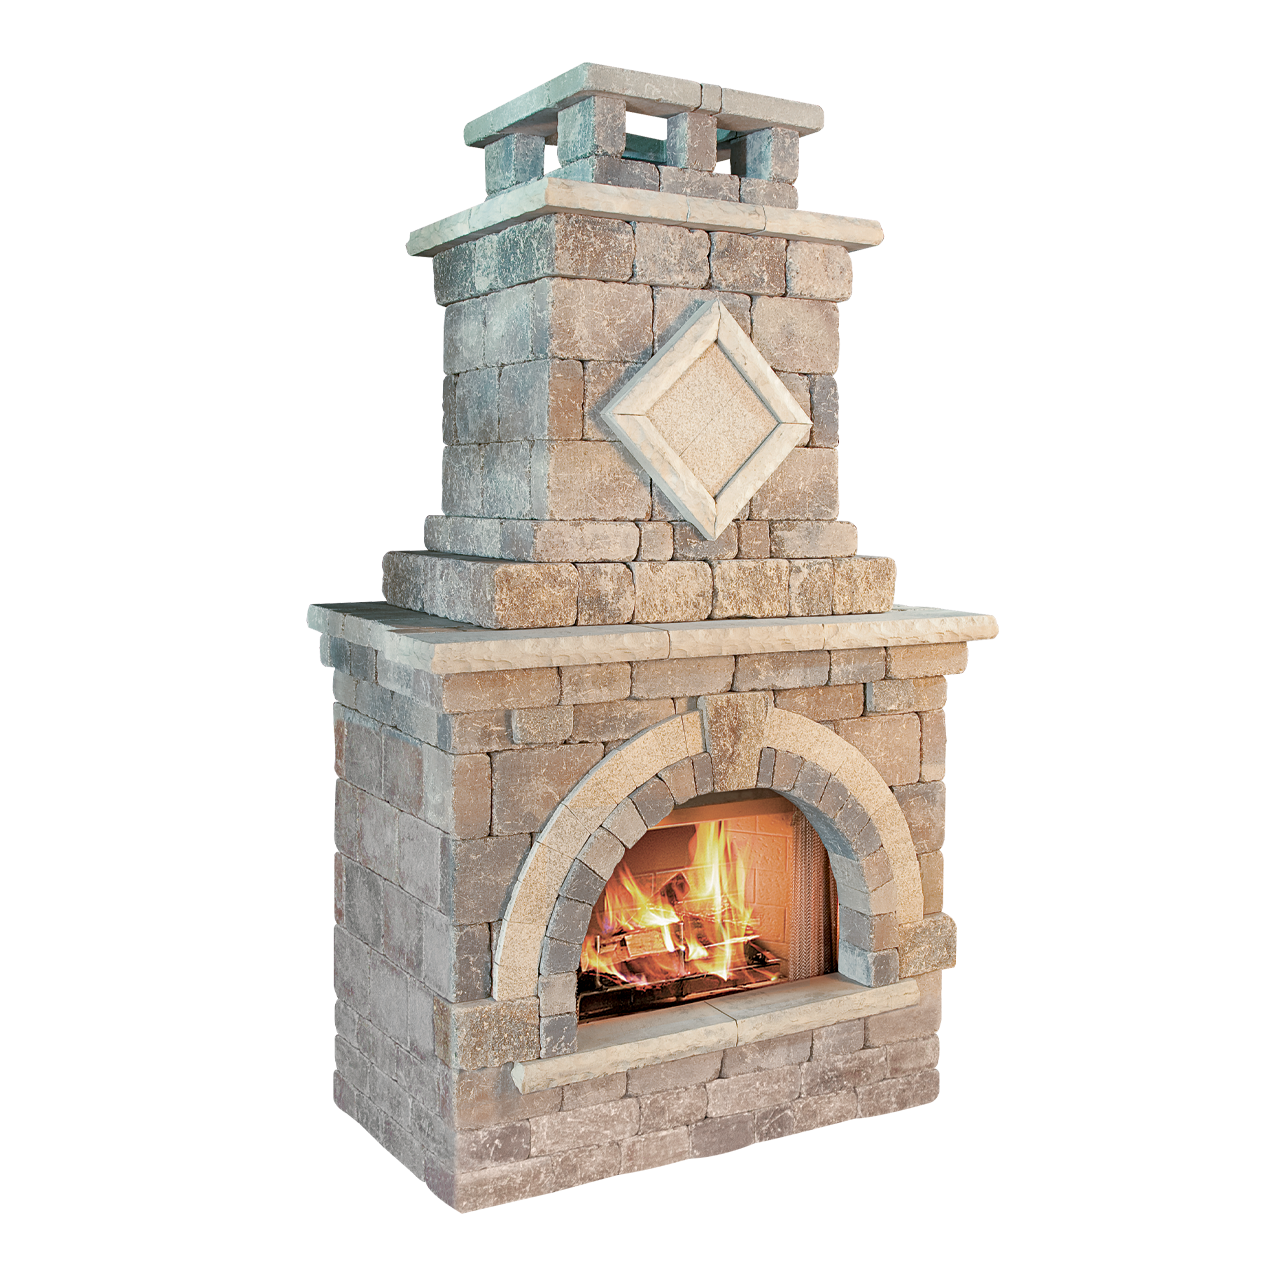 Barcelona fireplace